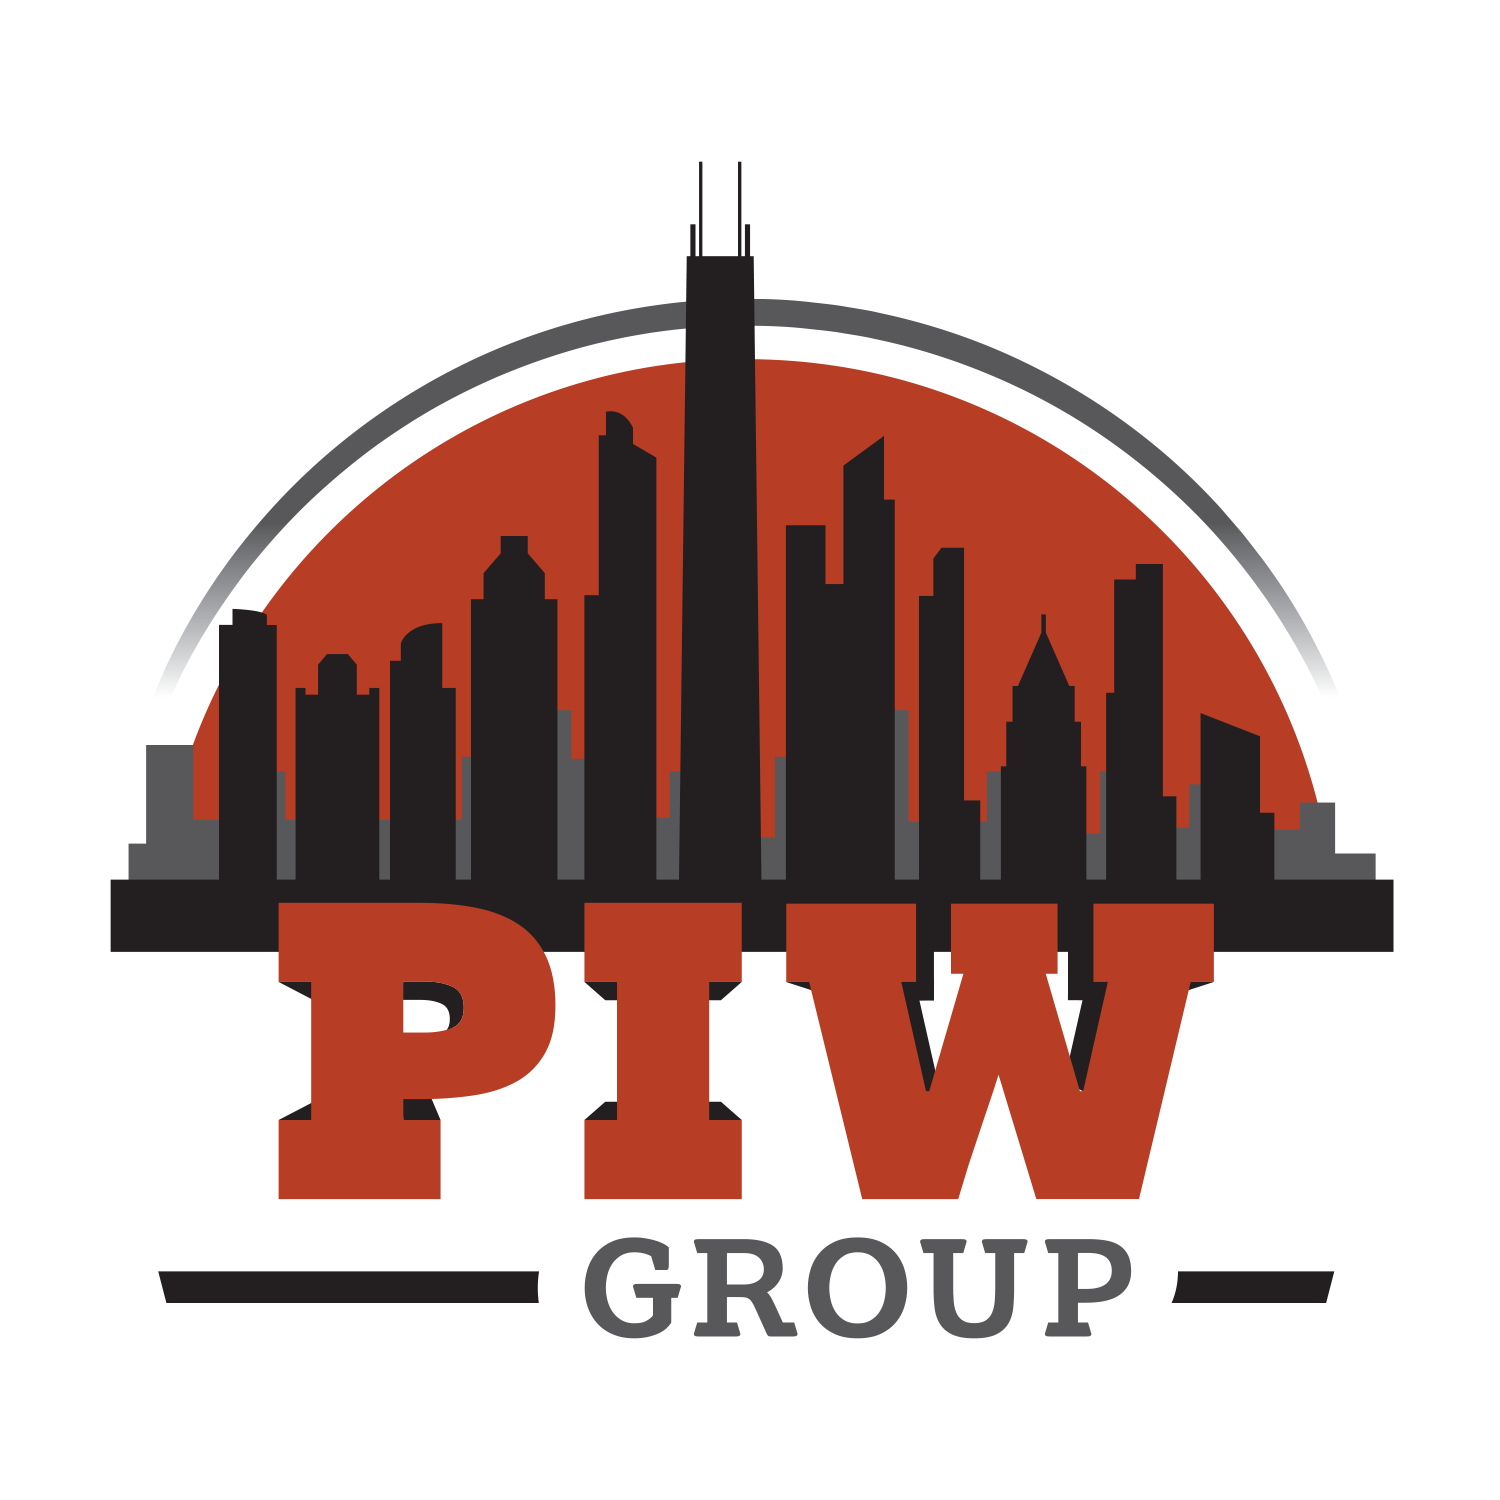 Providing PIW GROUP ~ WEBSITE DESIGN AND MAINTENANCE, SEO & BRANDING - Chicago, IL